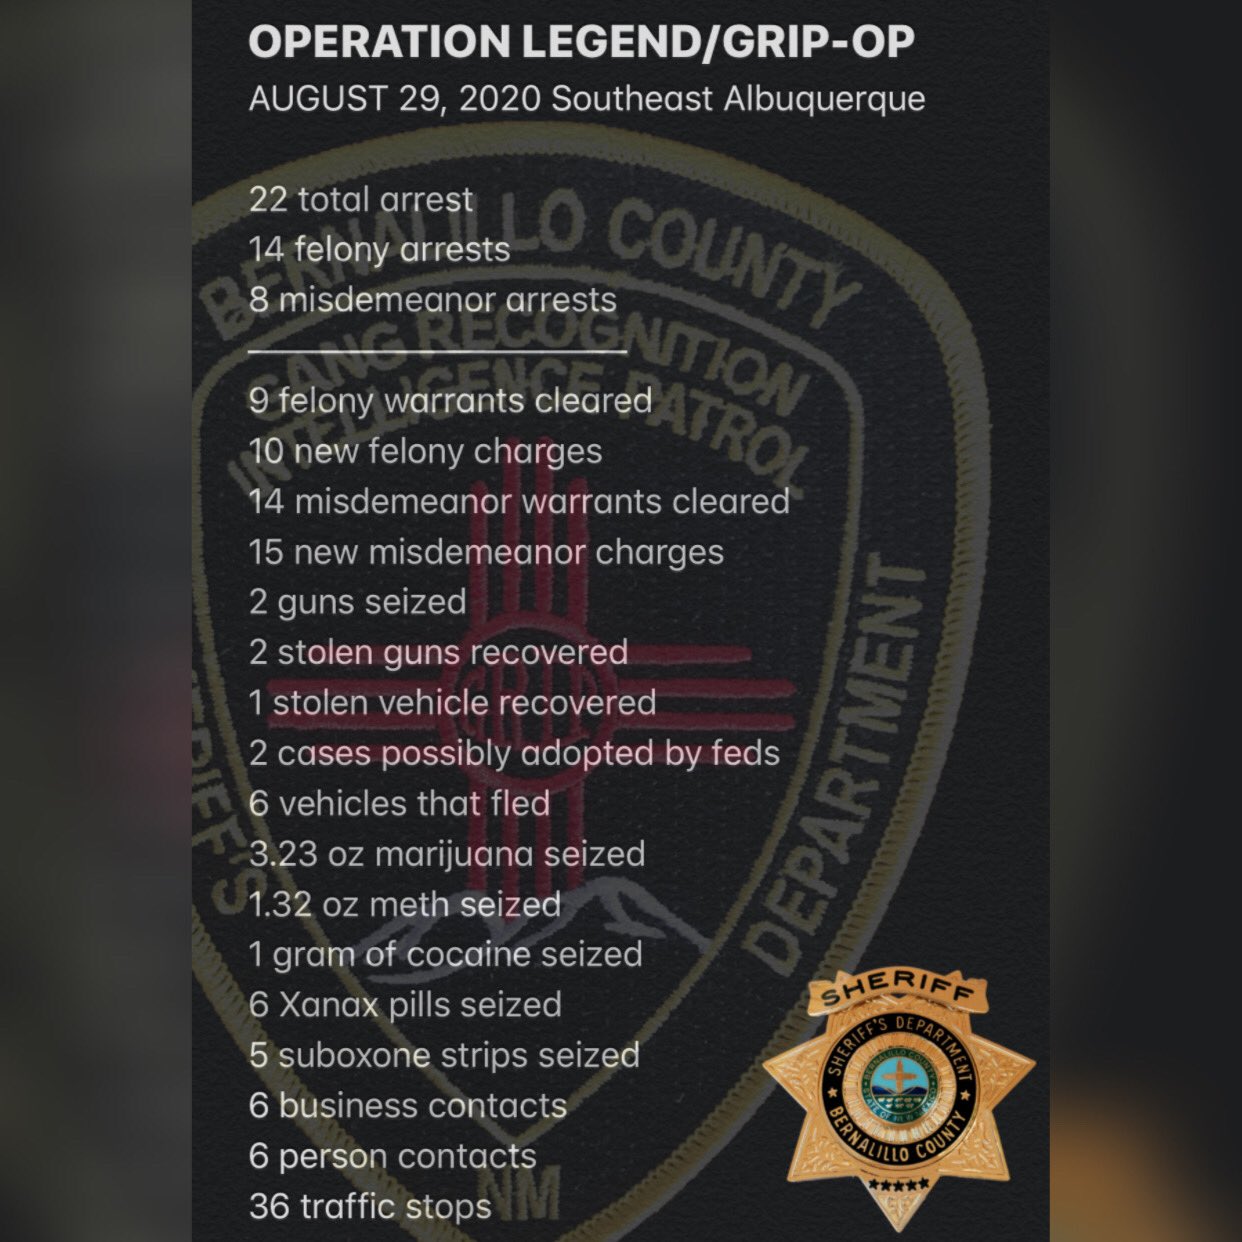 Operation Legend stats